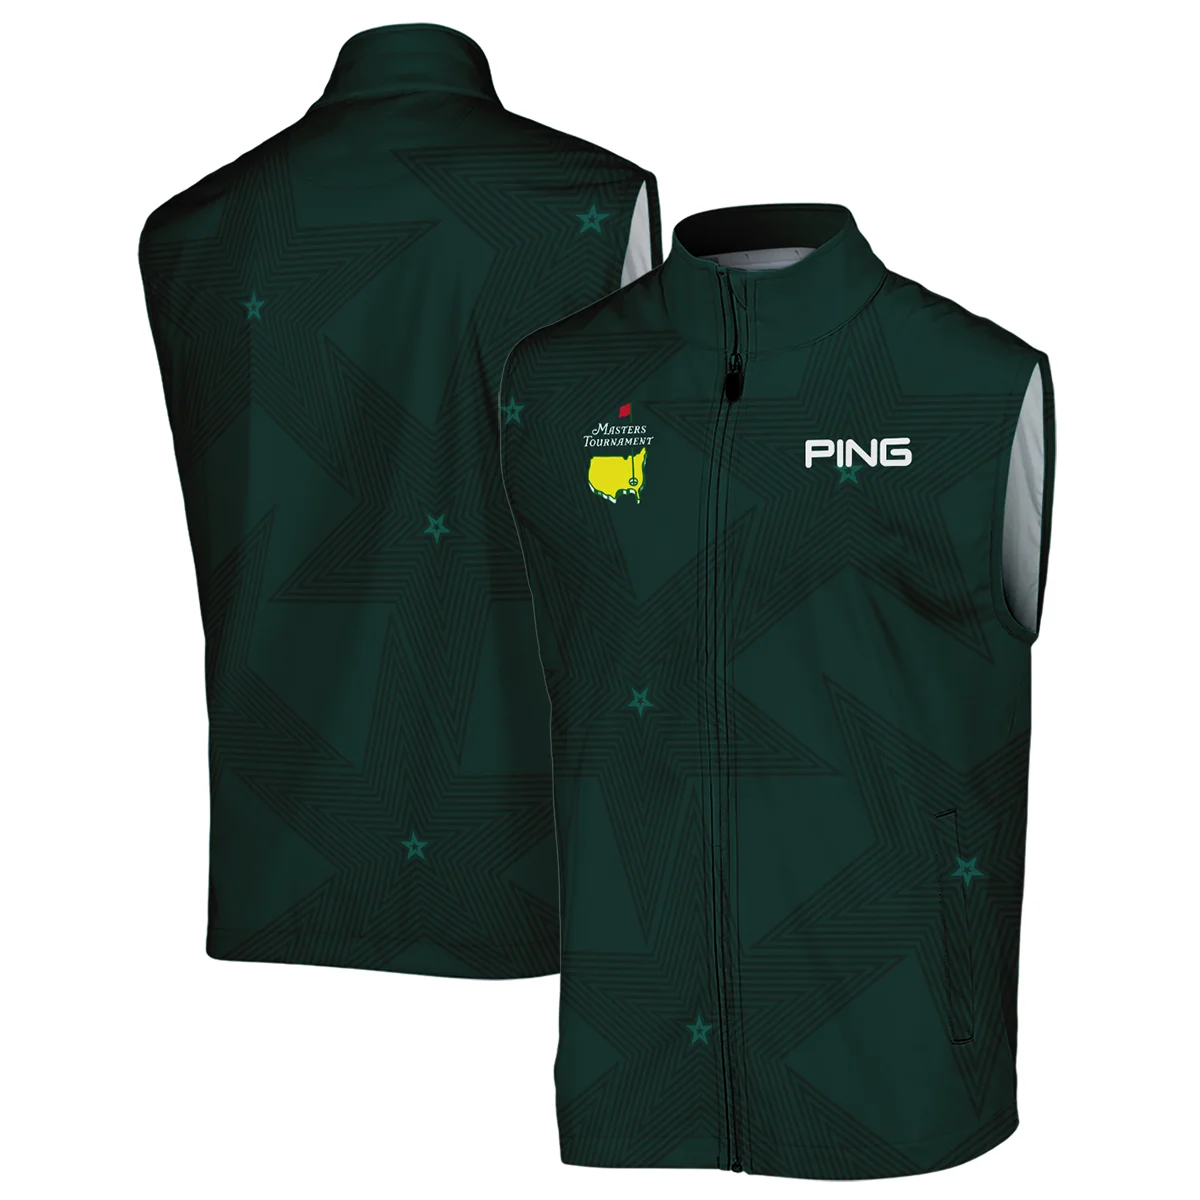 Dark Green Background Masters Tournament Ping Sleeveless Jacket Style Classic Sleeveless Jacket